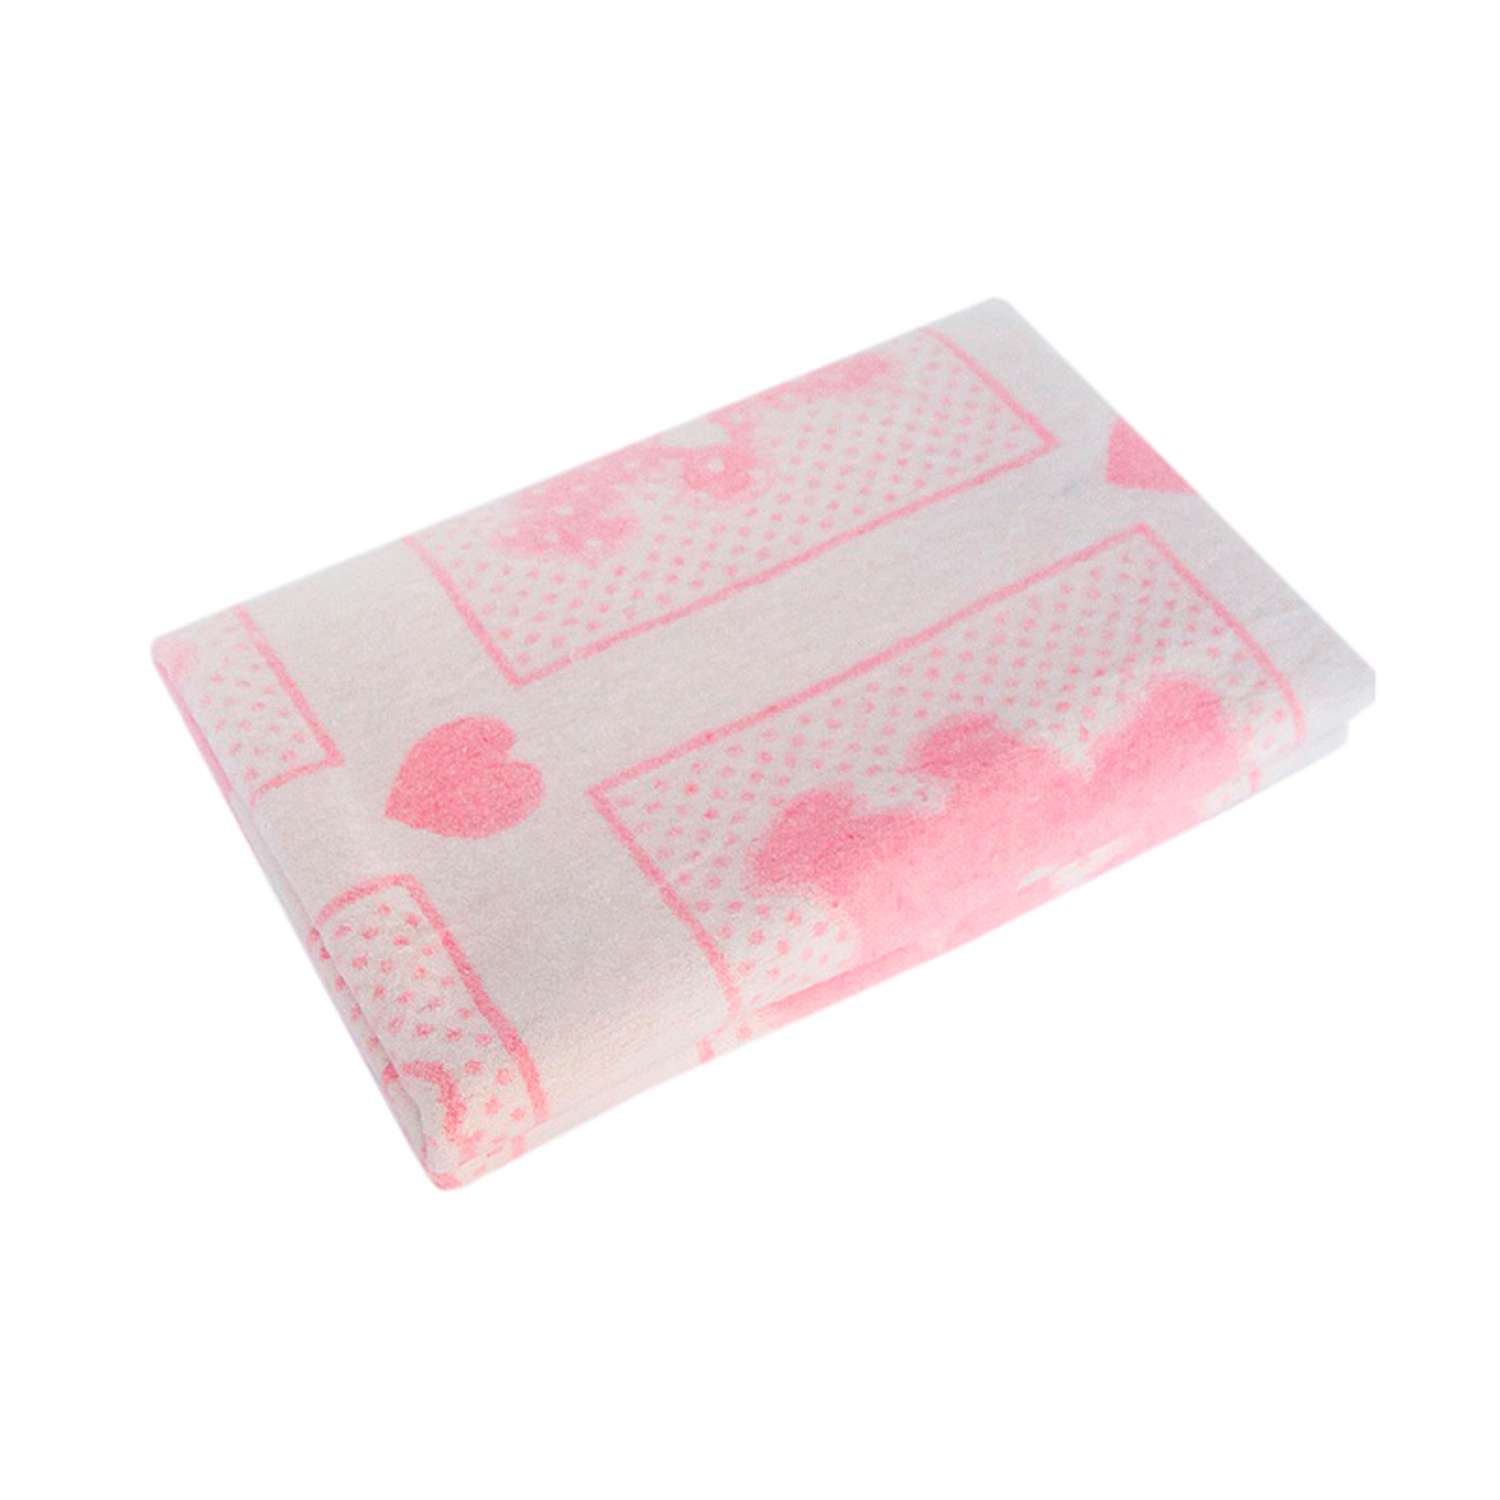 Одеяло байковое Споки Ноки жаккард 100х140 розовый - фото 1